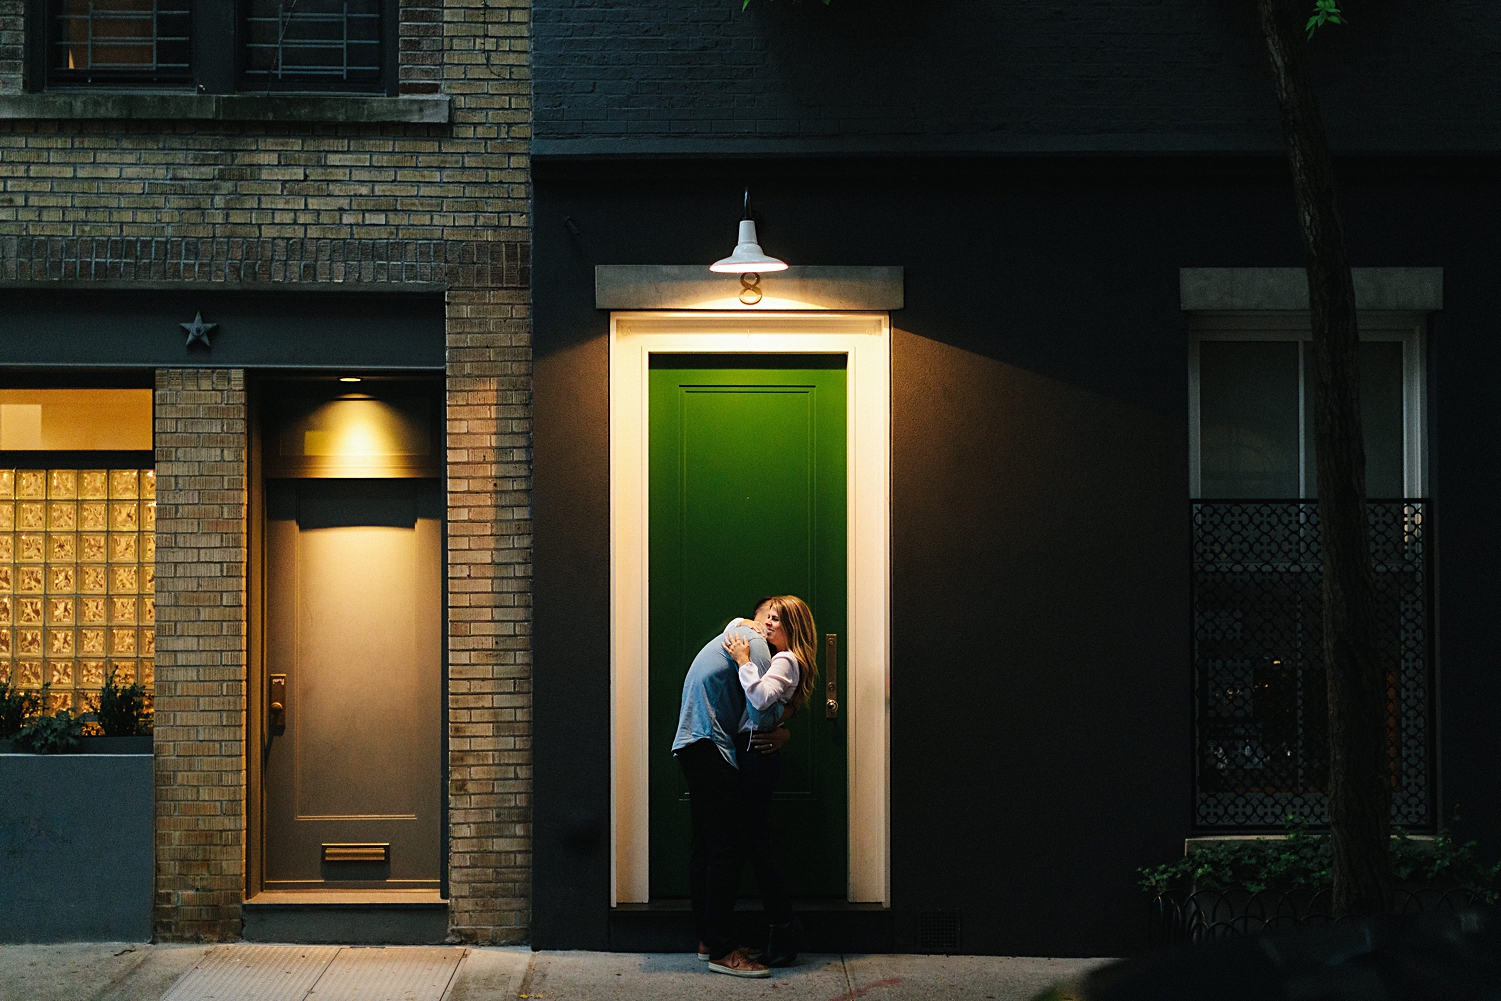 Man and woman embracing under street light green door sidewalk